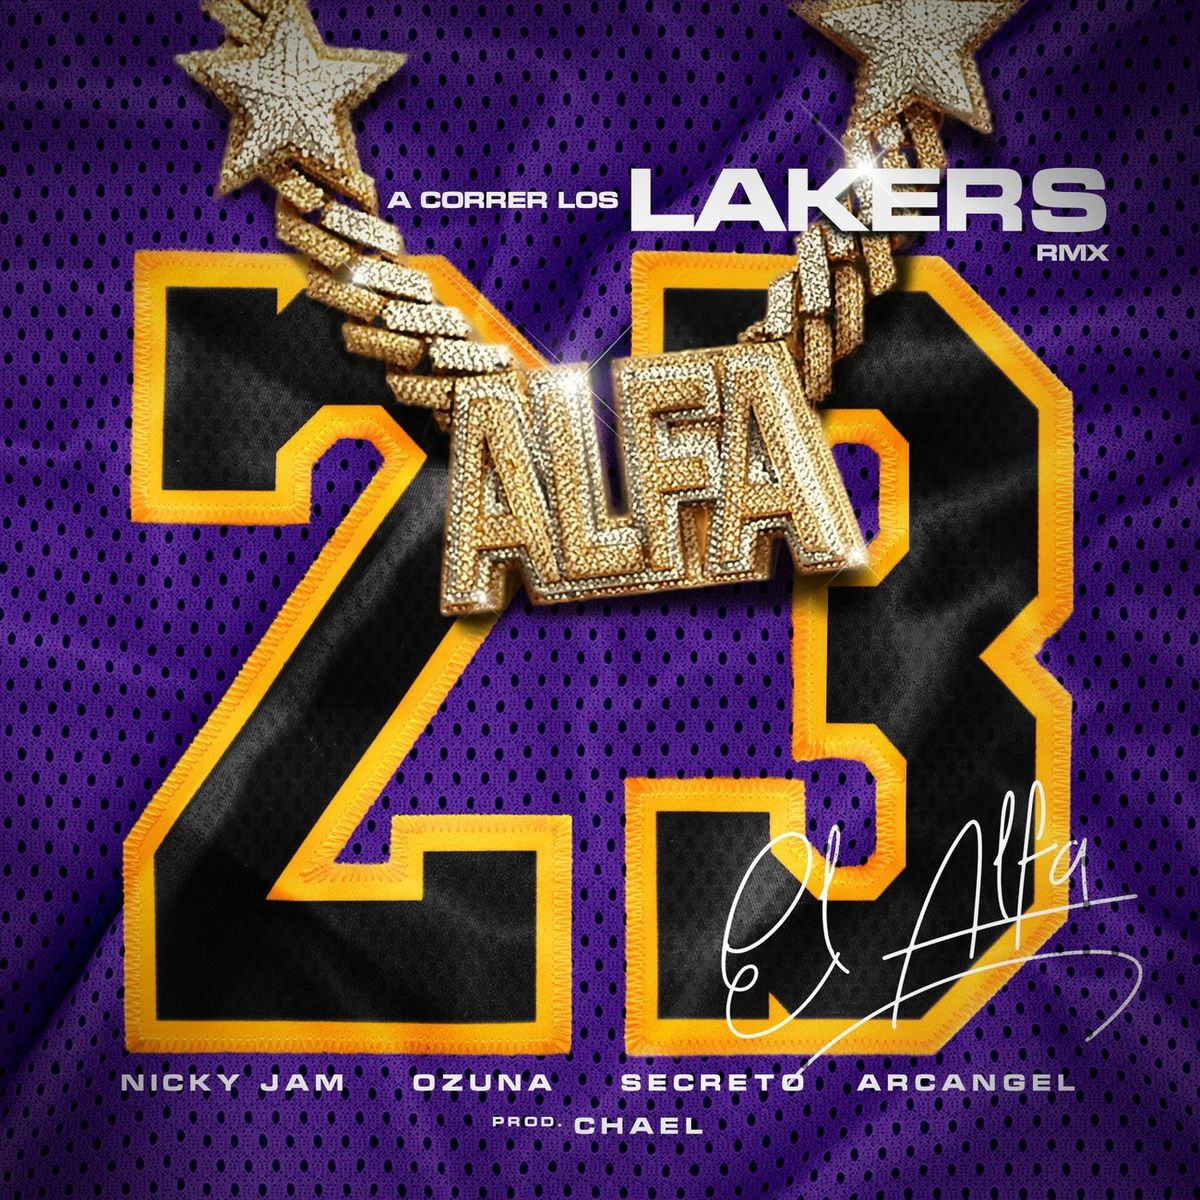 El Alfa x Nicky Jam x Ozuna x Arcangel x Secreto El Famoso Biberon - A Correr los Lakers rmx.mp3